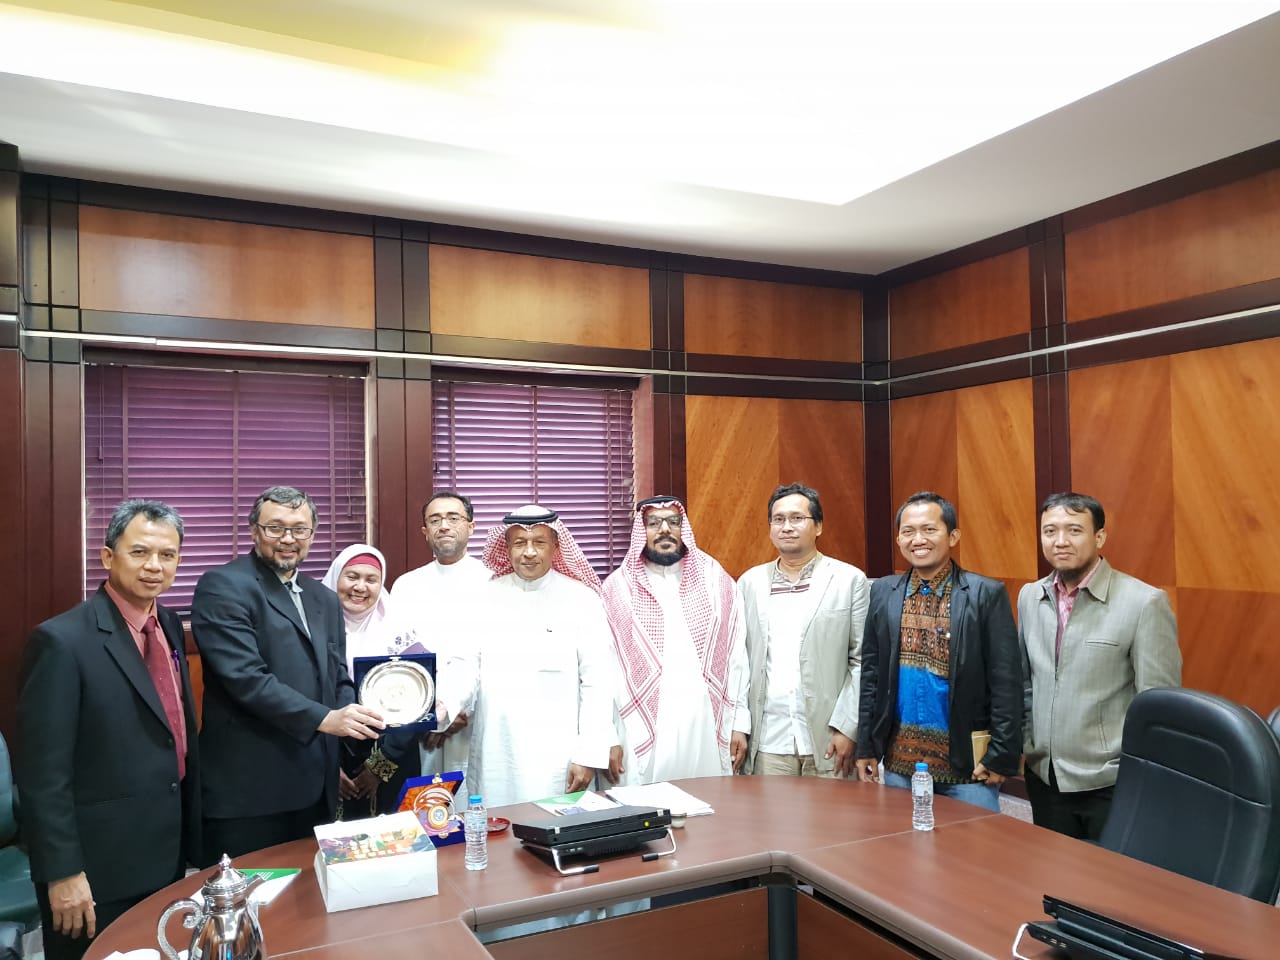 UNAIR and King Abdul Aziz University collaboration